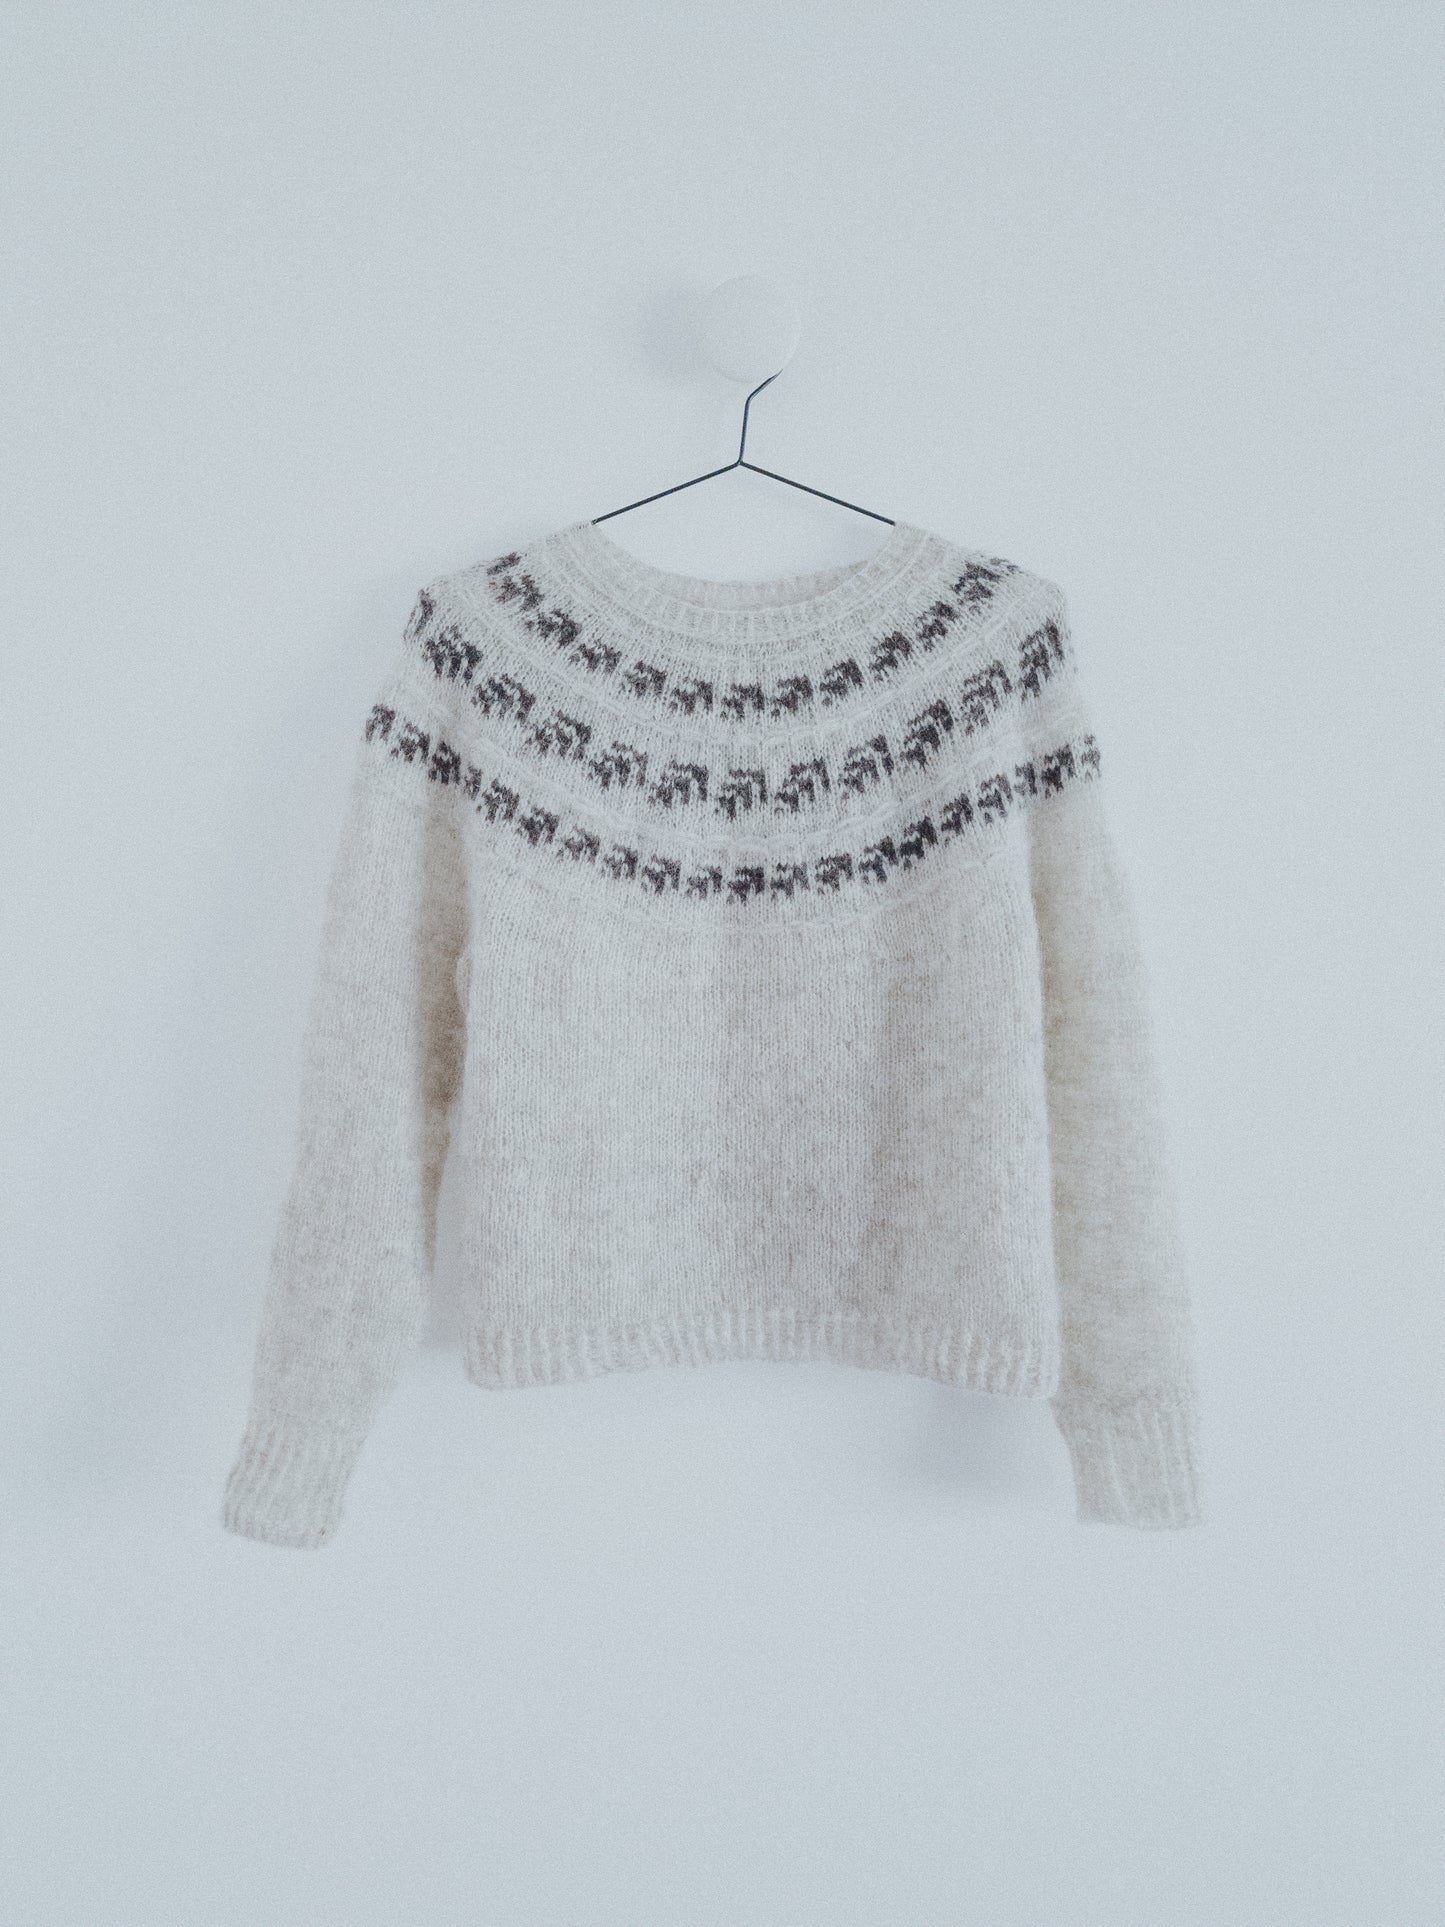 Fernlys Sweater - Knitting Pattern